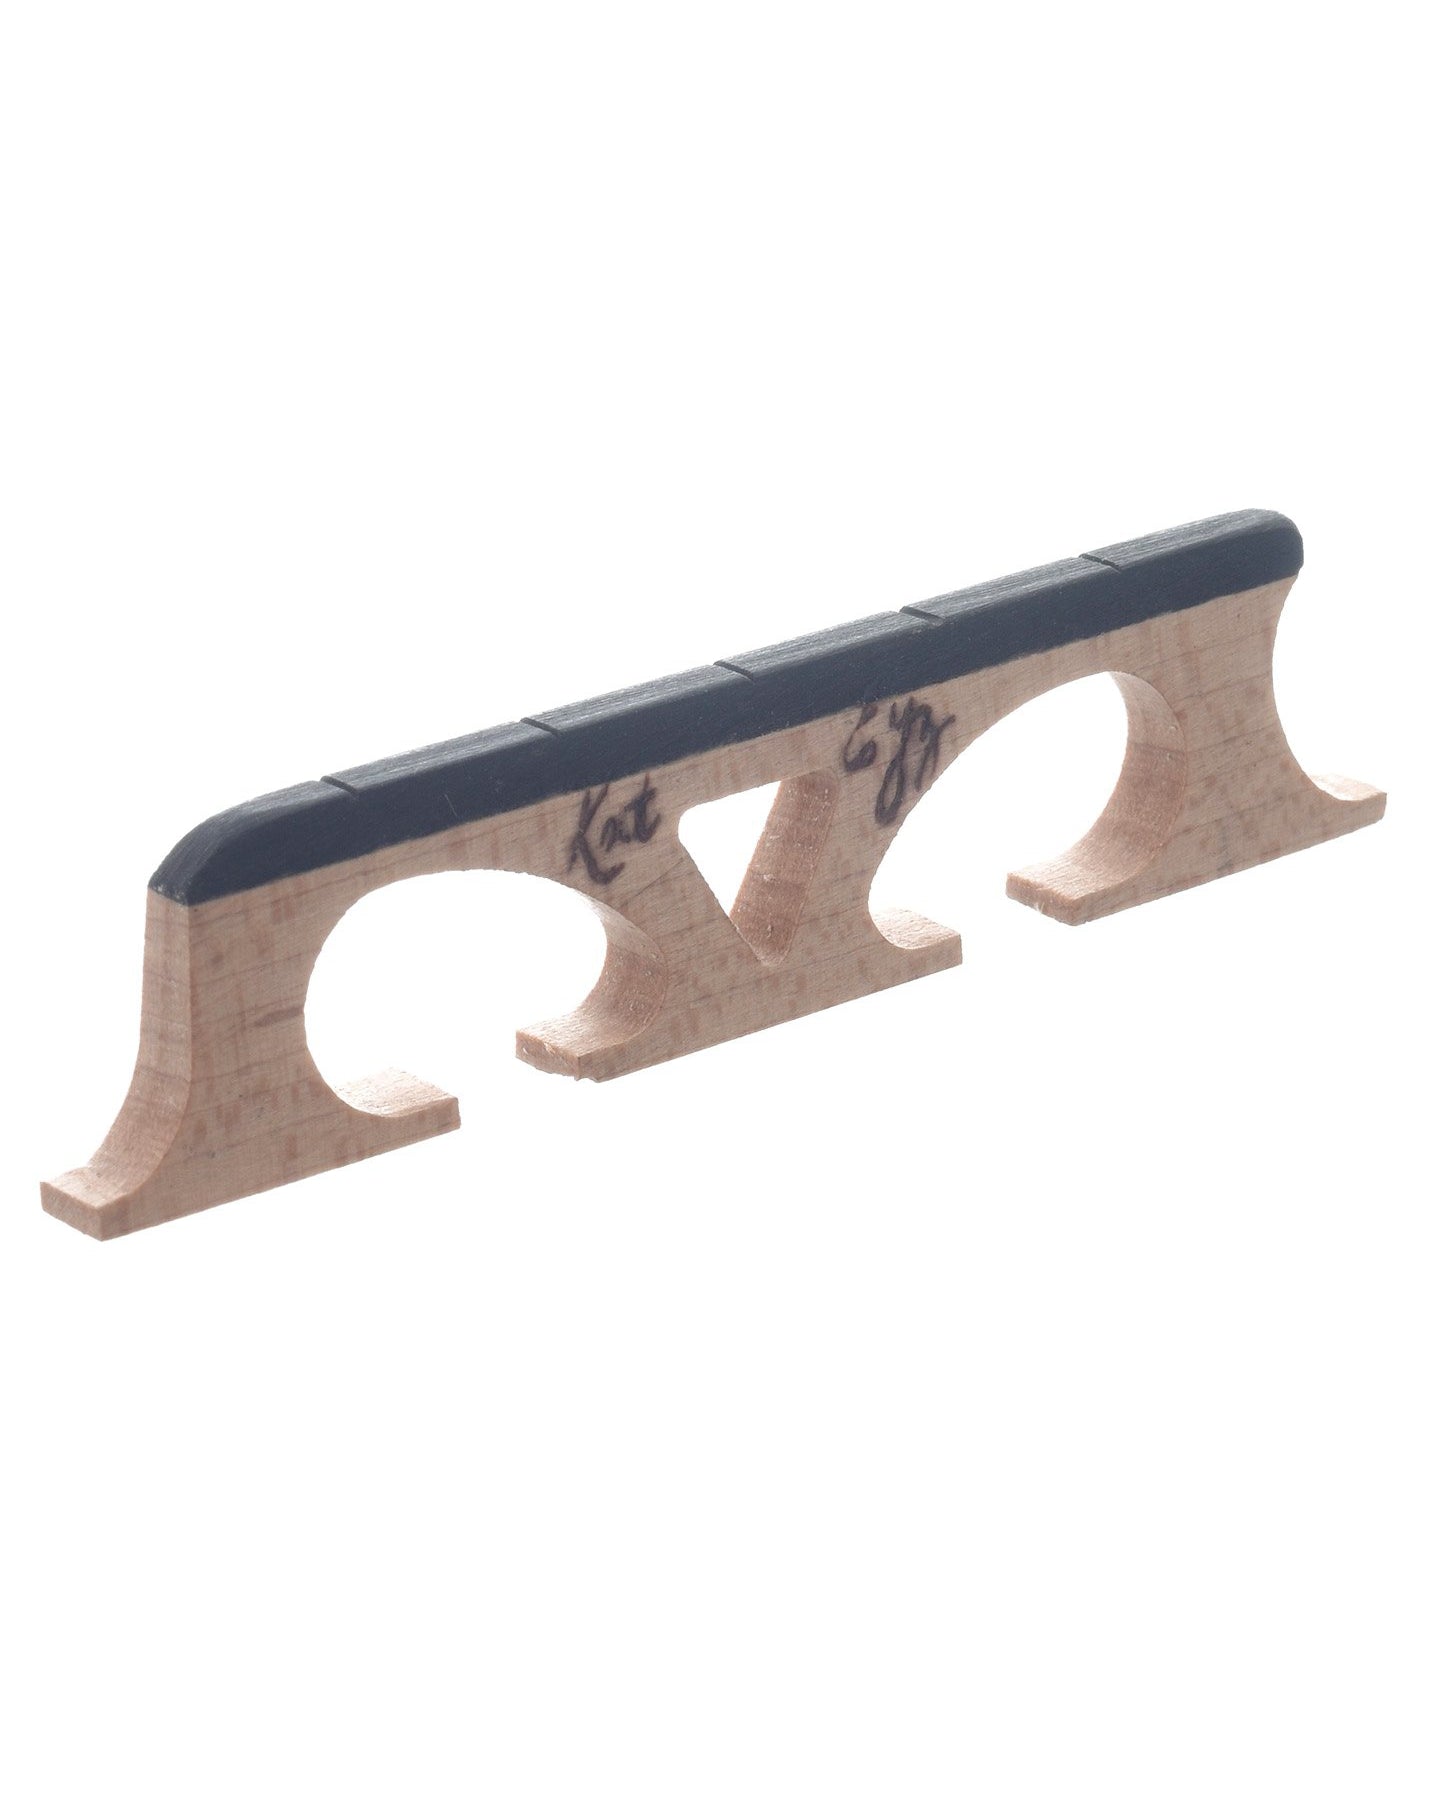 Image 1 of Kat Eyz Old Wood Banjo Bridge, Standard Spaced, 5/8" High - SKU# KEBB1-ST-5/8 : Product Type Accessories & Parts : Elderly Instruments